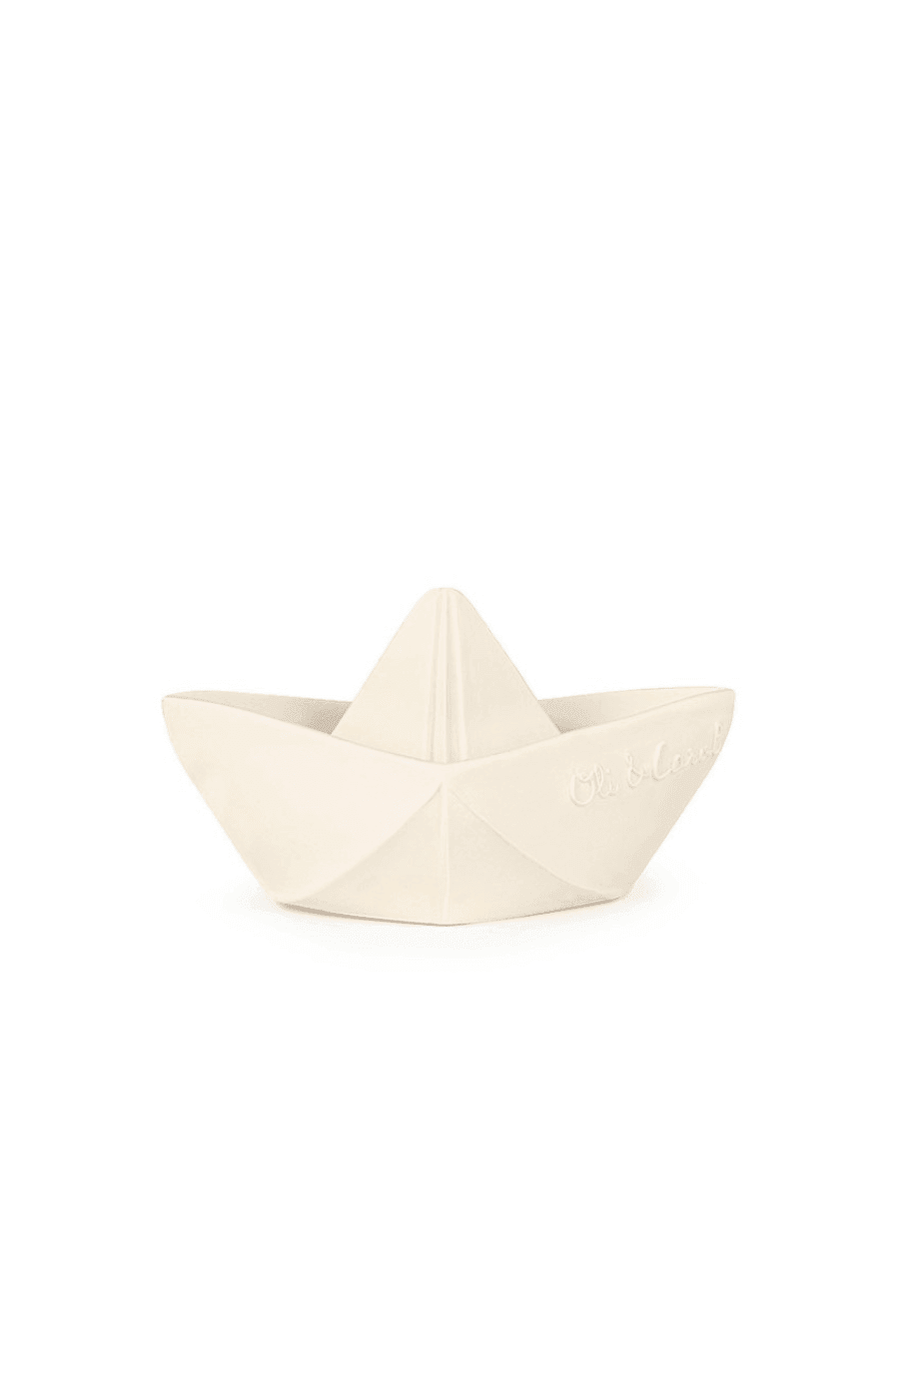 Oli & Carol Origami Boat Bath Toy, White - Hello Little Birdie